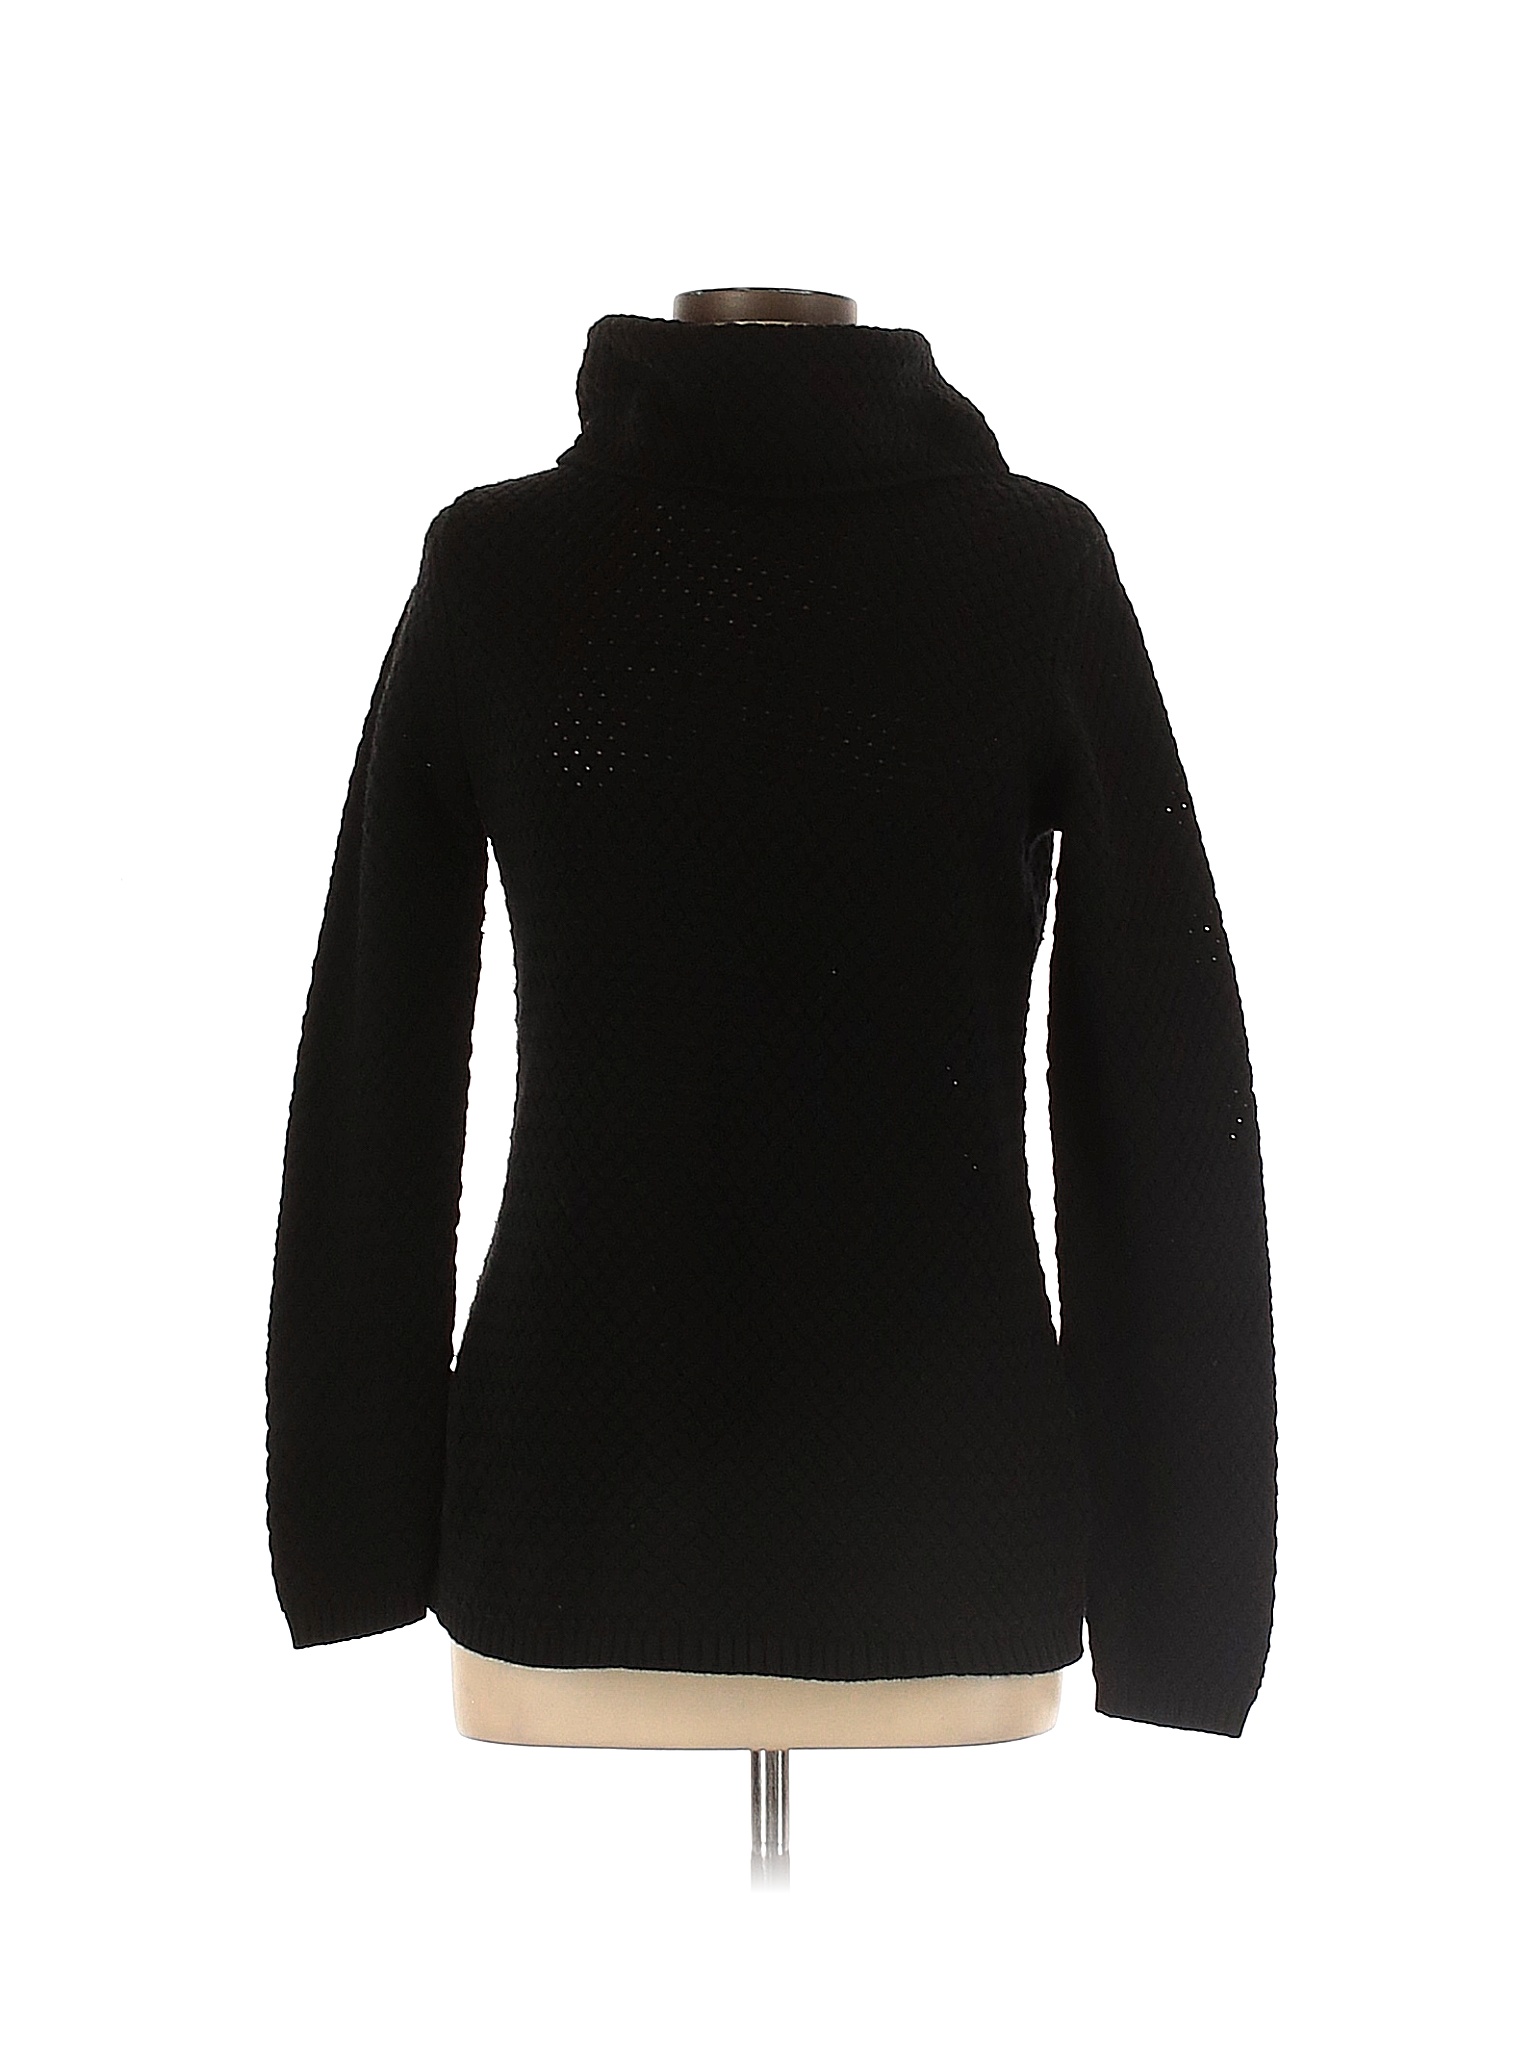 Dana Buchman Solid Black Turtleneck Sweater Size M - 83% off | thredUP